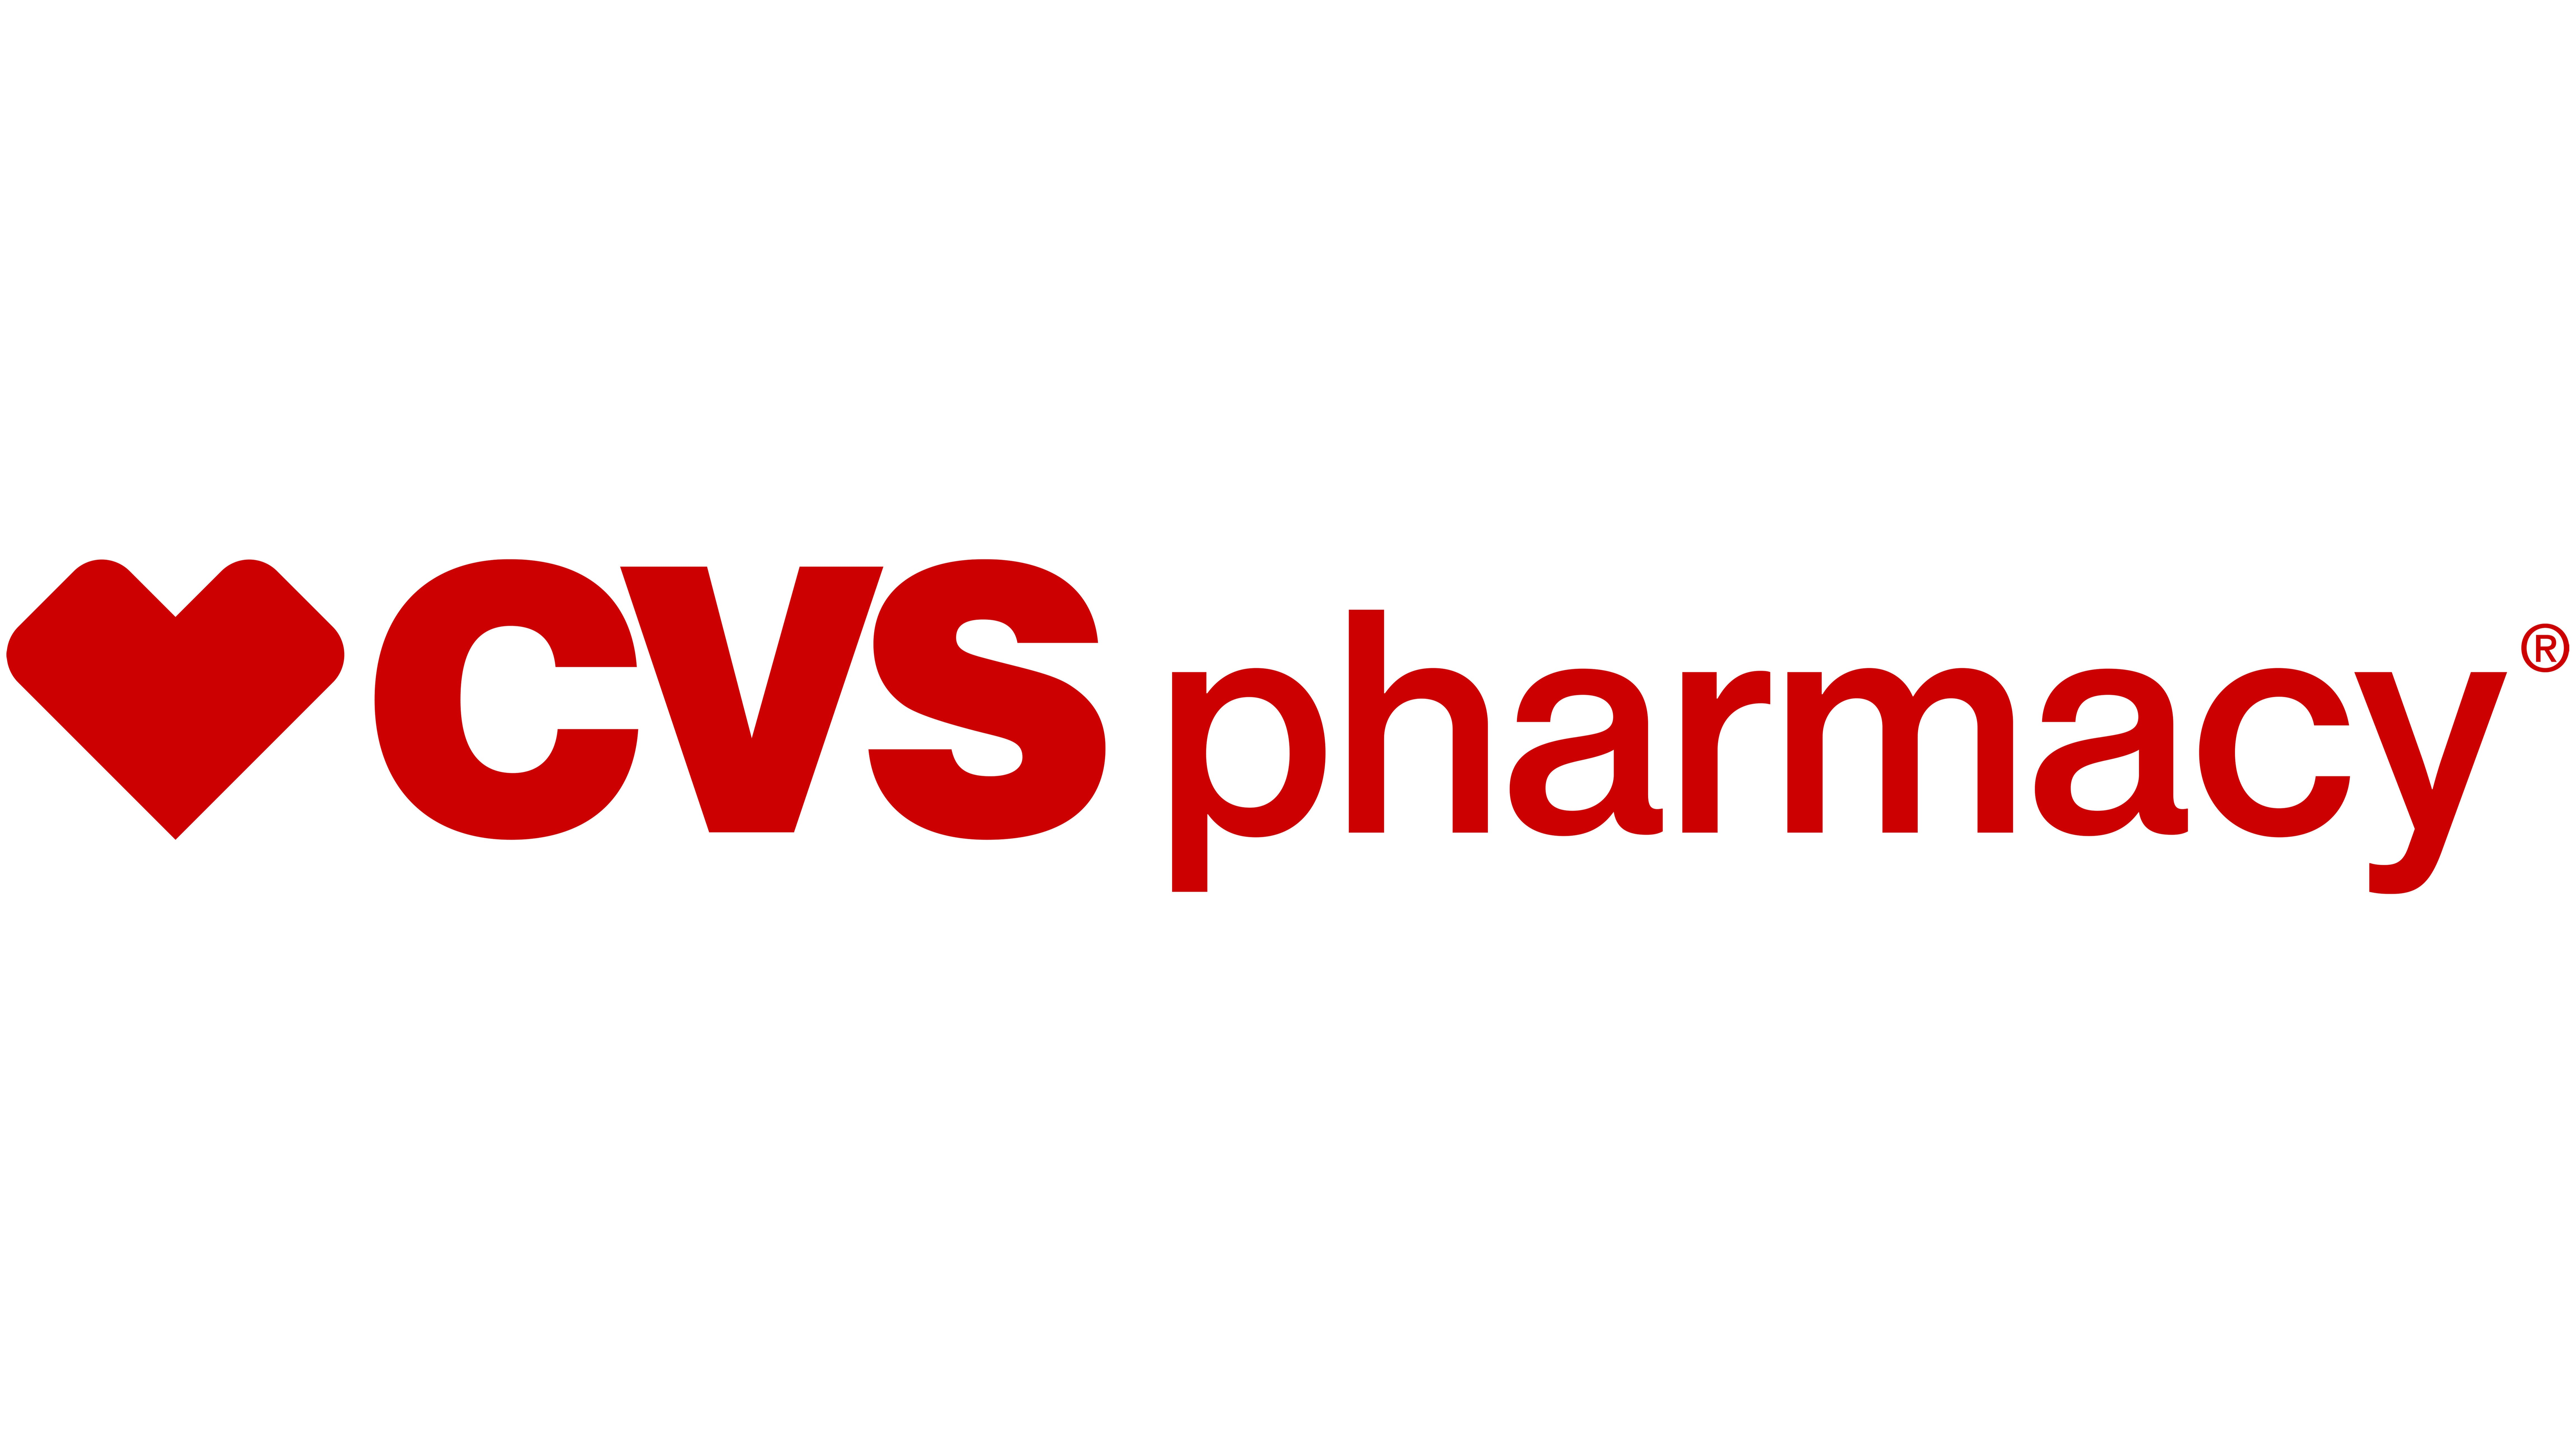 pharmacist rx logo